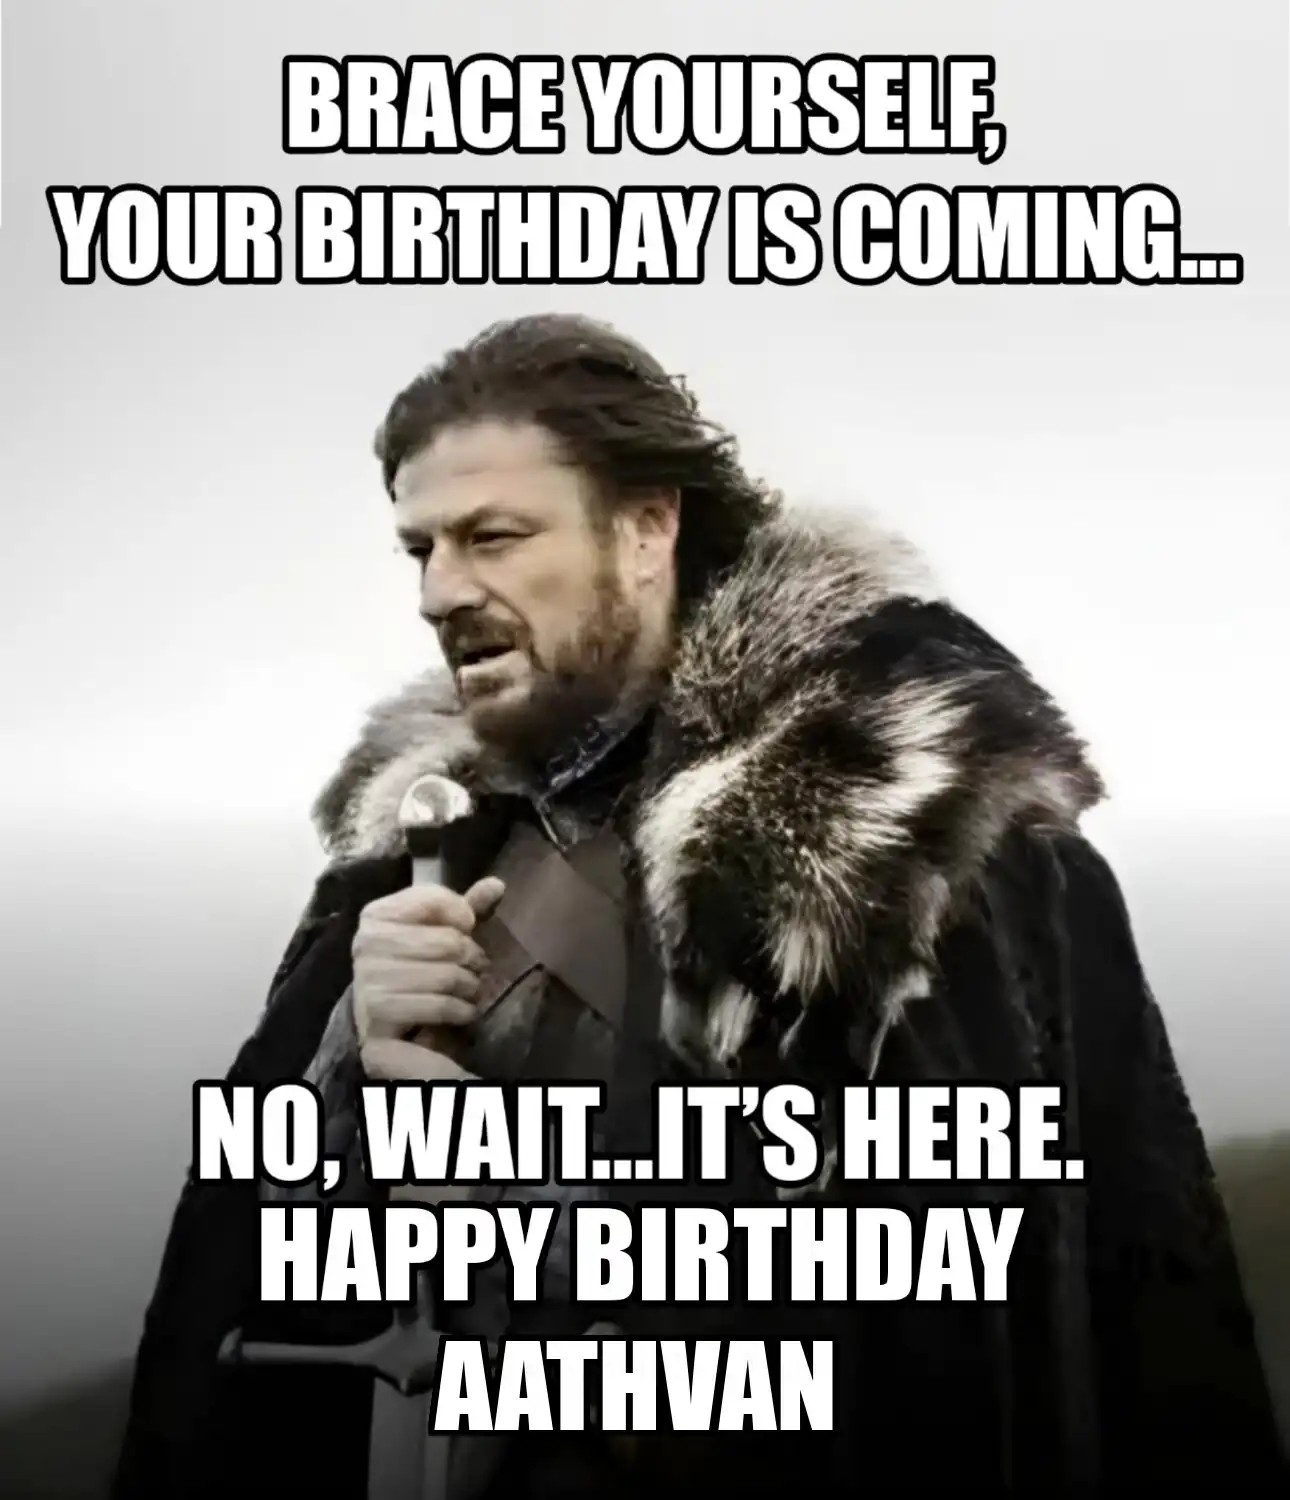 Happy Birthday Aathvan Brace Yourself Your Birthday Is Coming Meme